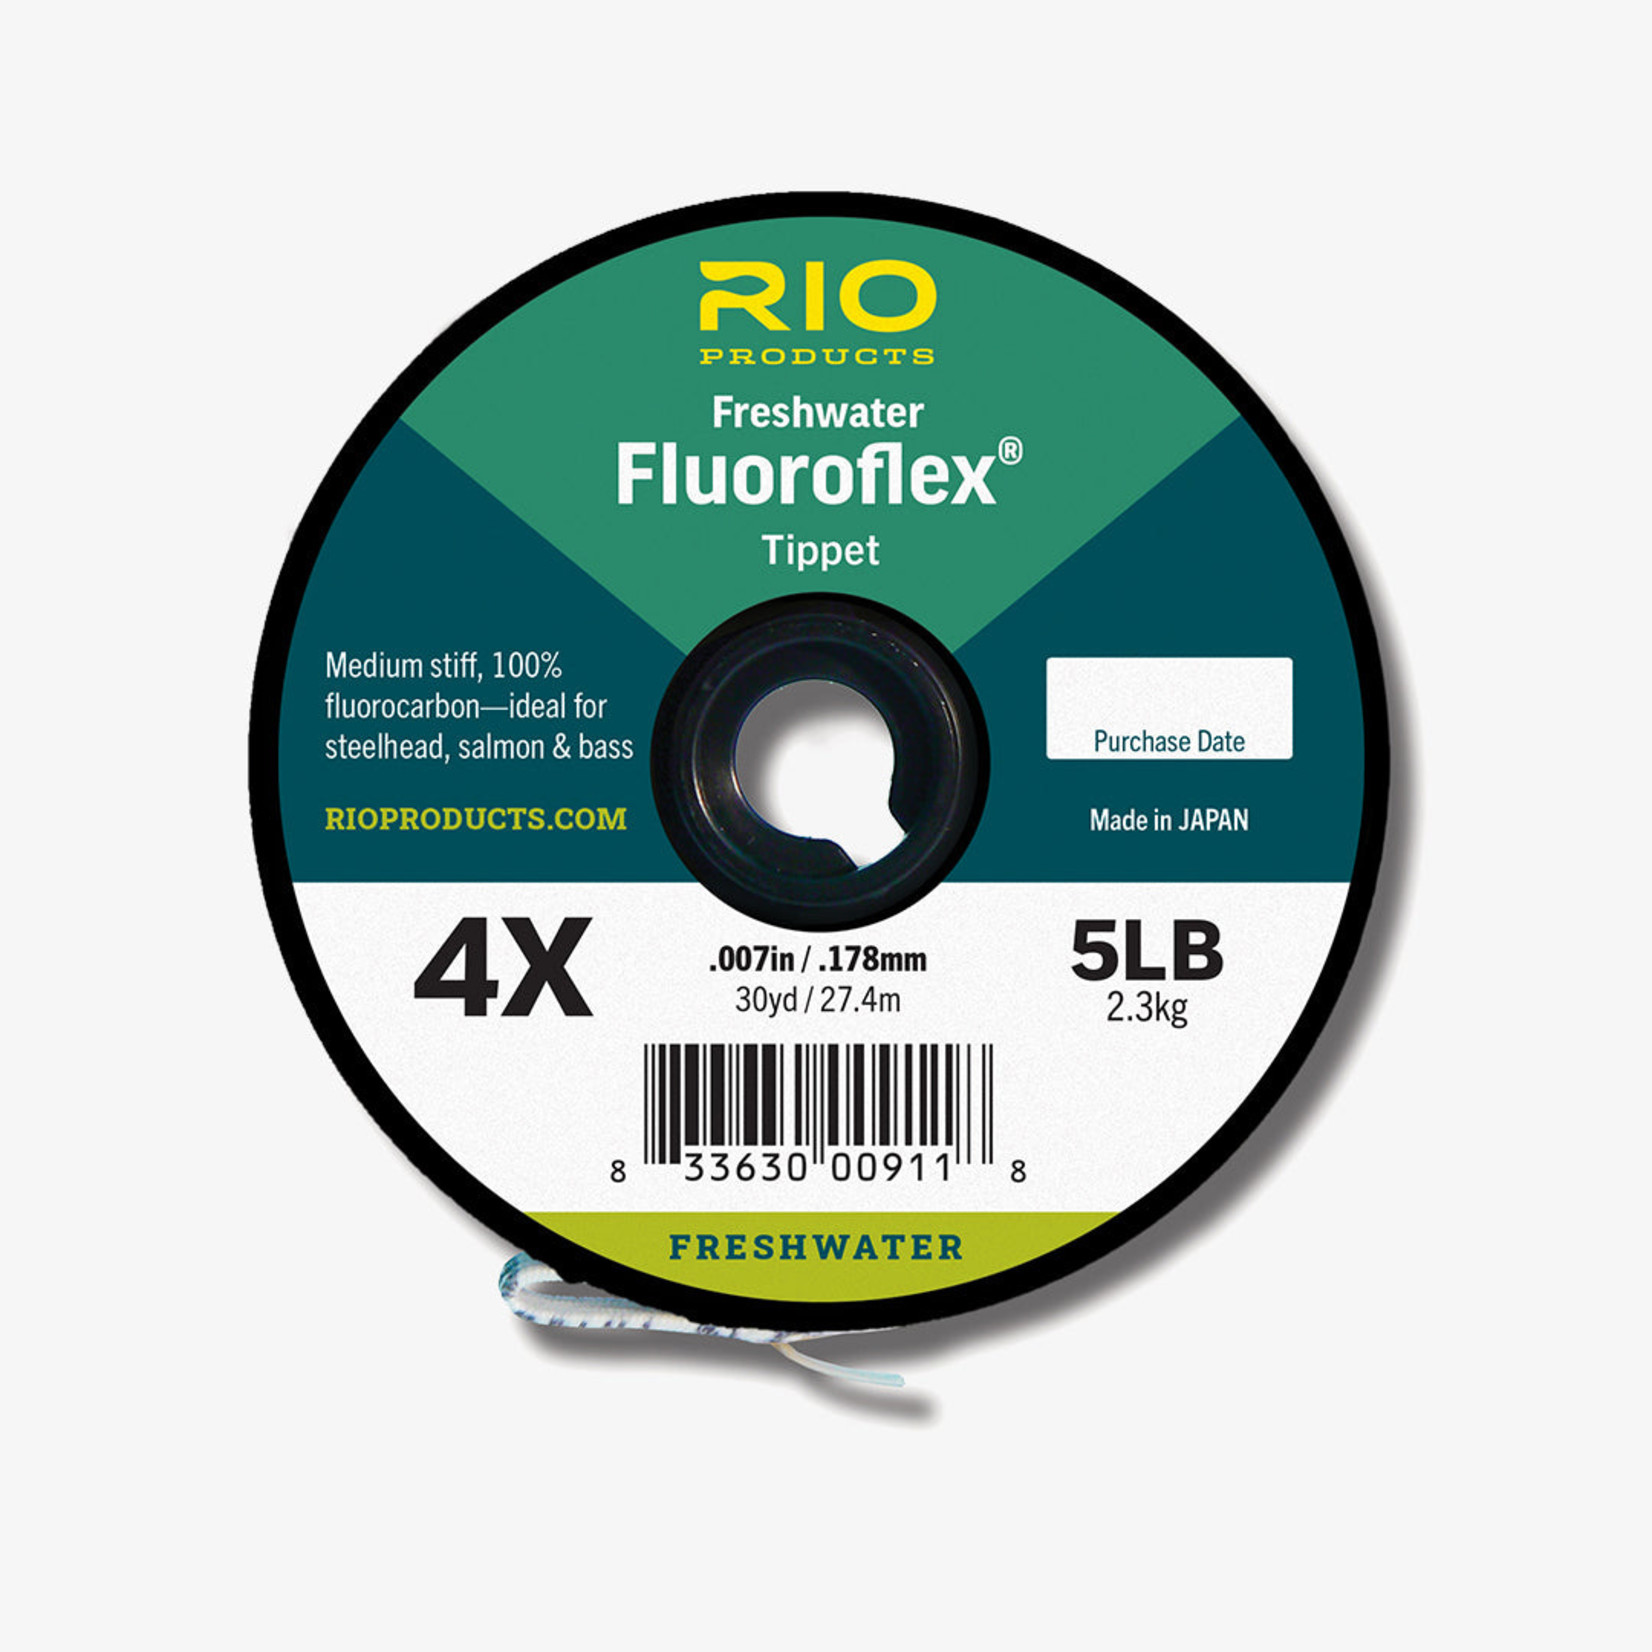 RIO Rio FLUOROFLEX FRESHWATER TIPPET 30YD 2X